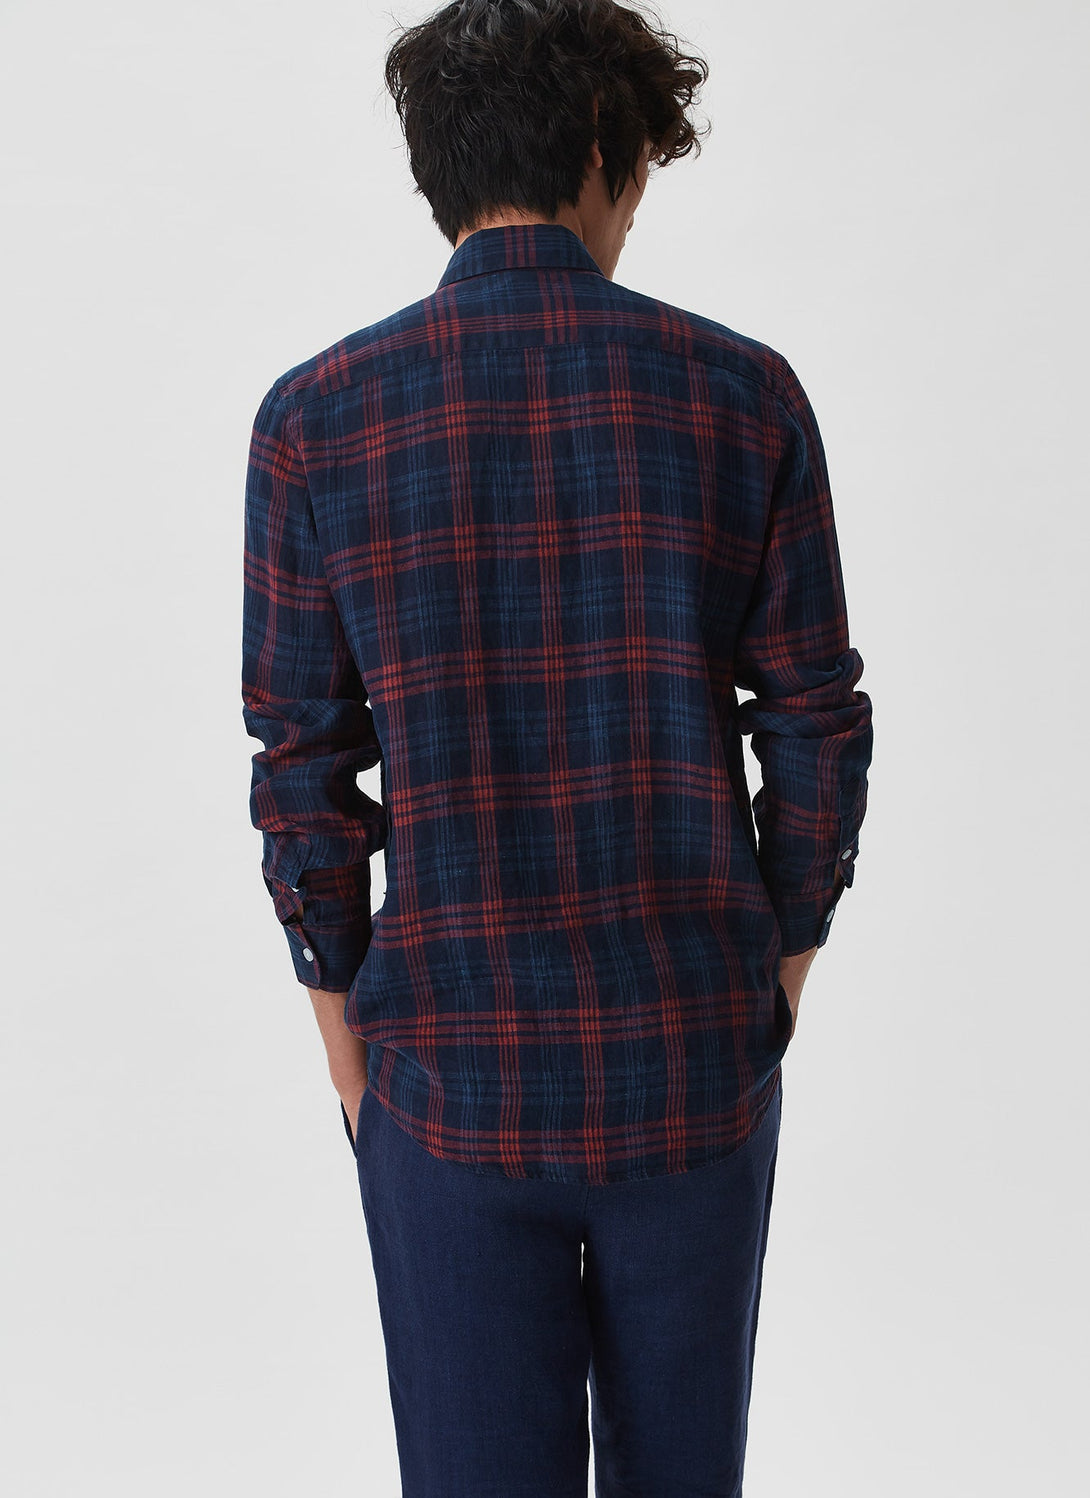 Men Long-Sleeve Shirt | Blue Check Shirt by Spanish designer Adolfo Dominguez